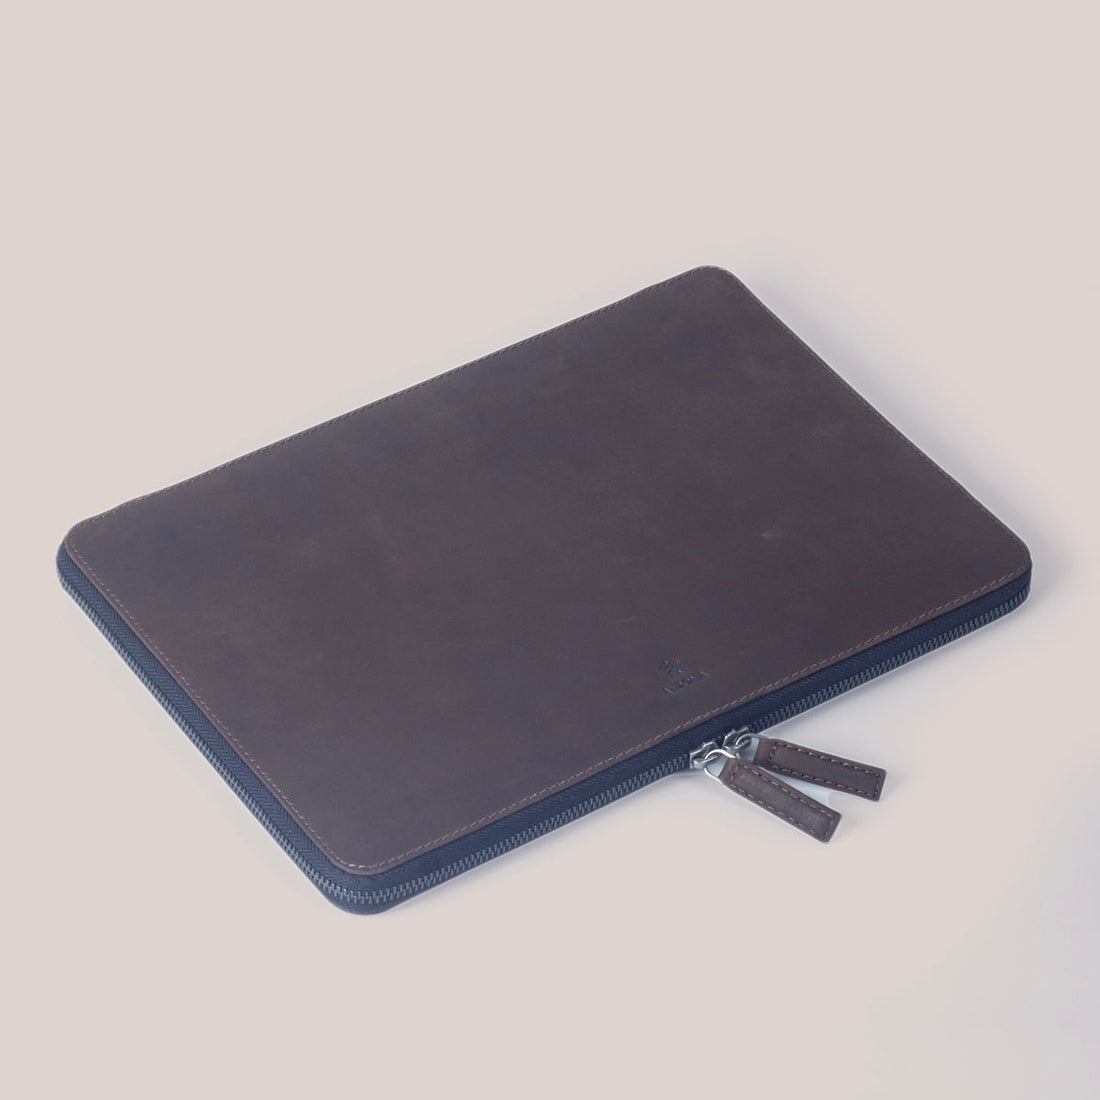 Samsung Galaxy Zippered Laptop Case - Onyx Black